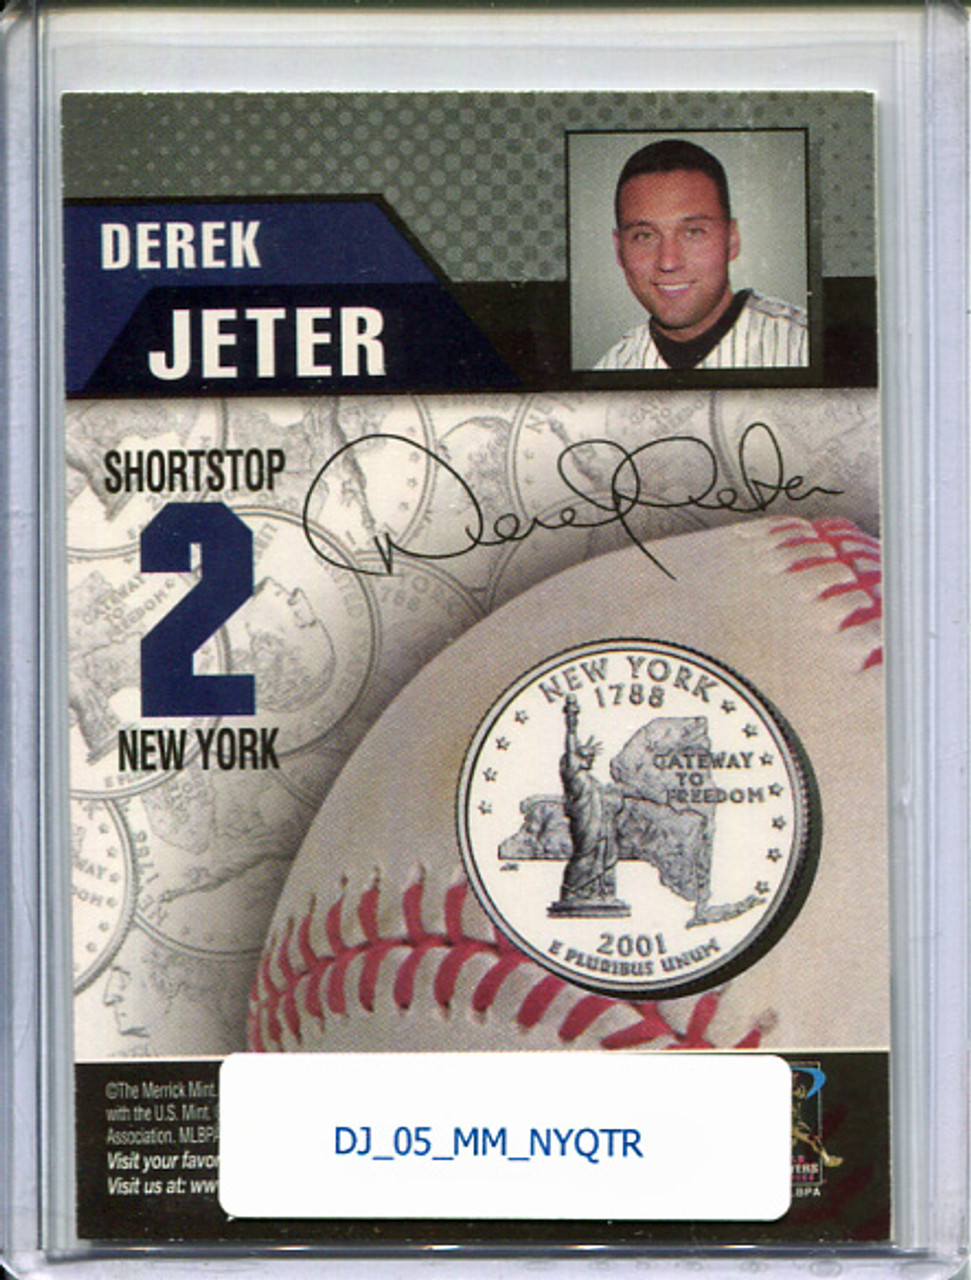 Derek Jeter 2005 Merrick Mint Colorized Quarters Green, Card Only